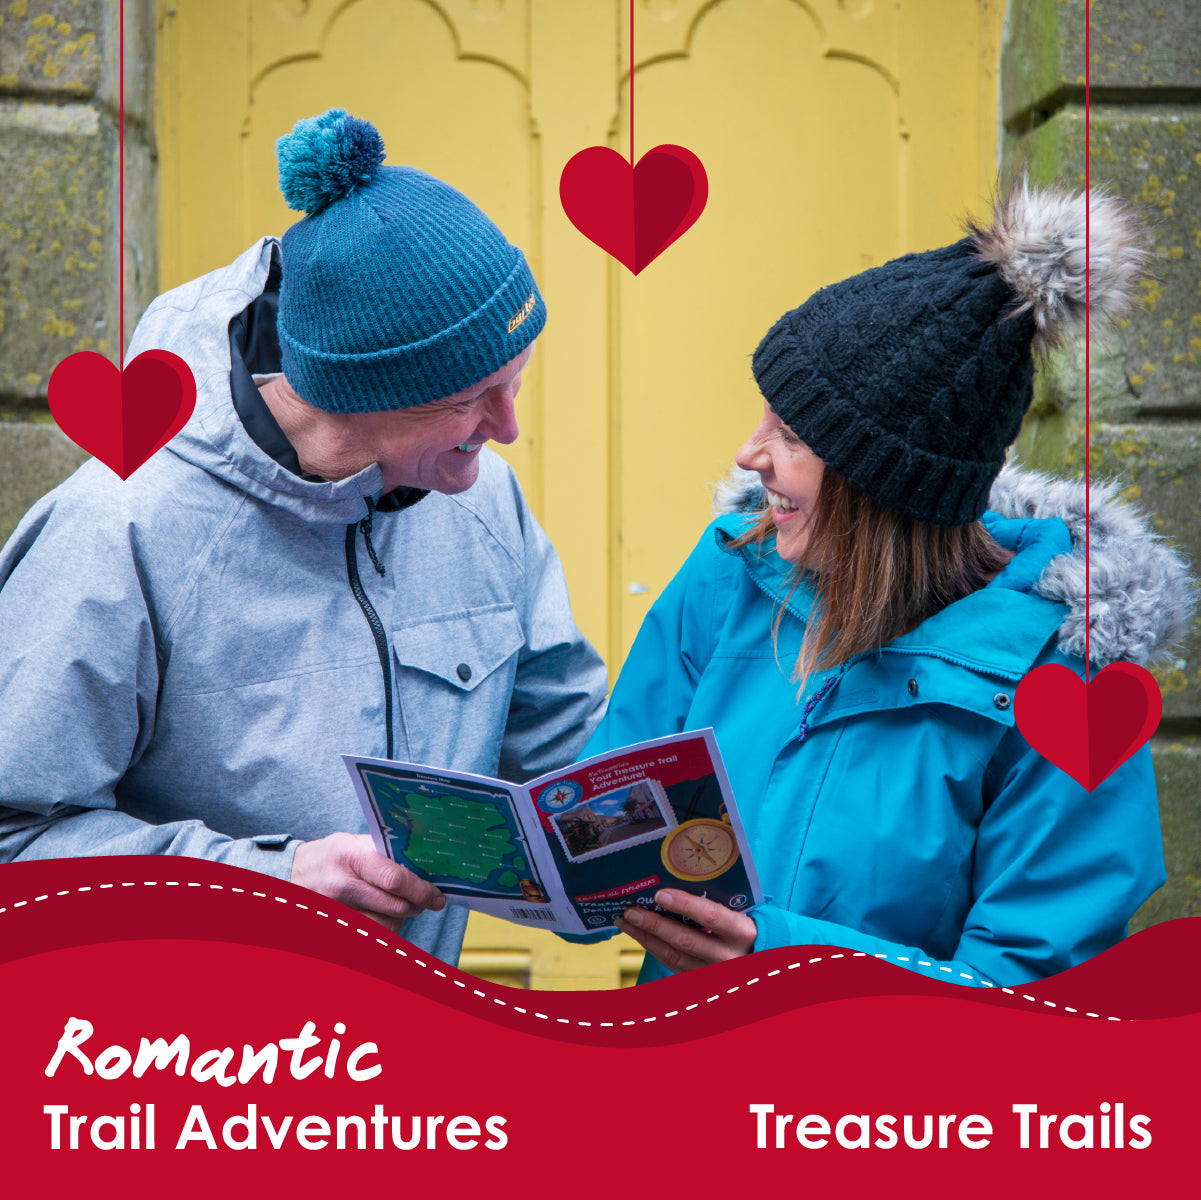 Romantic Trail adventures from Treasure Trails